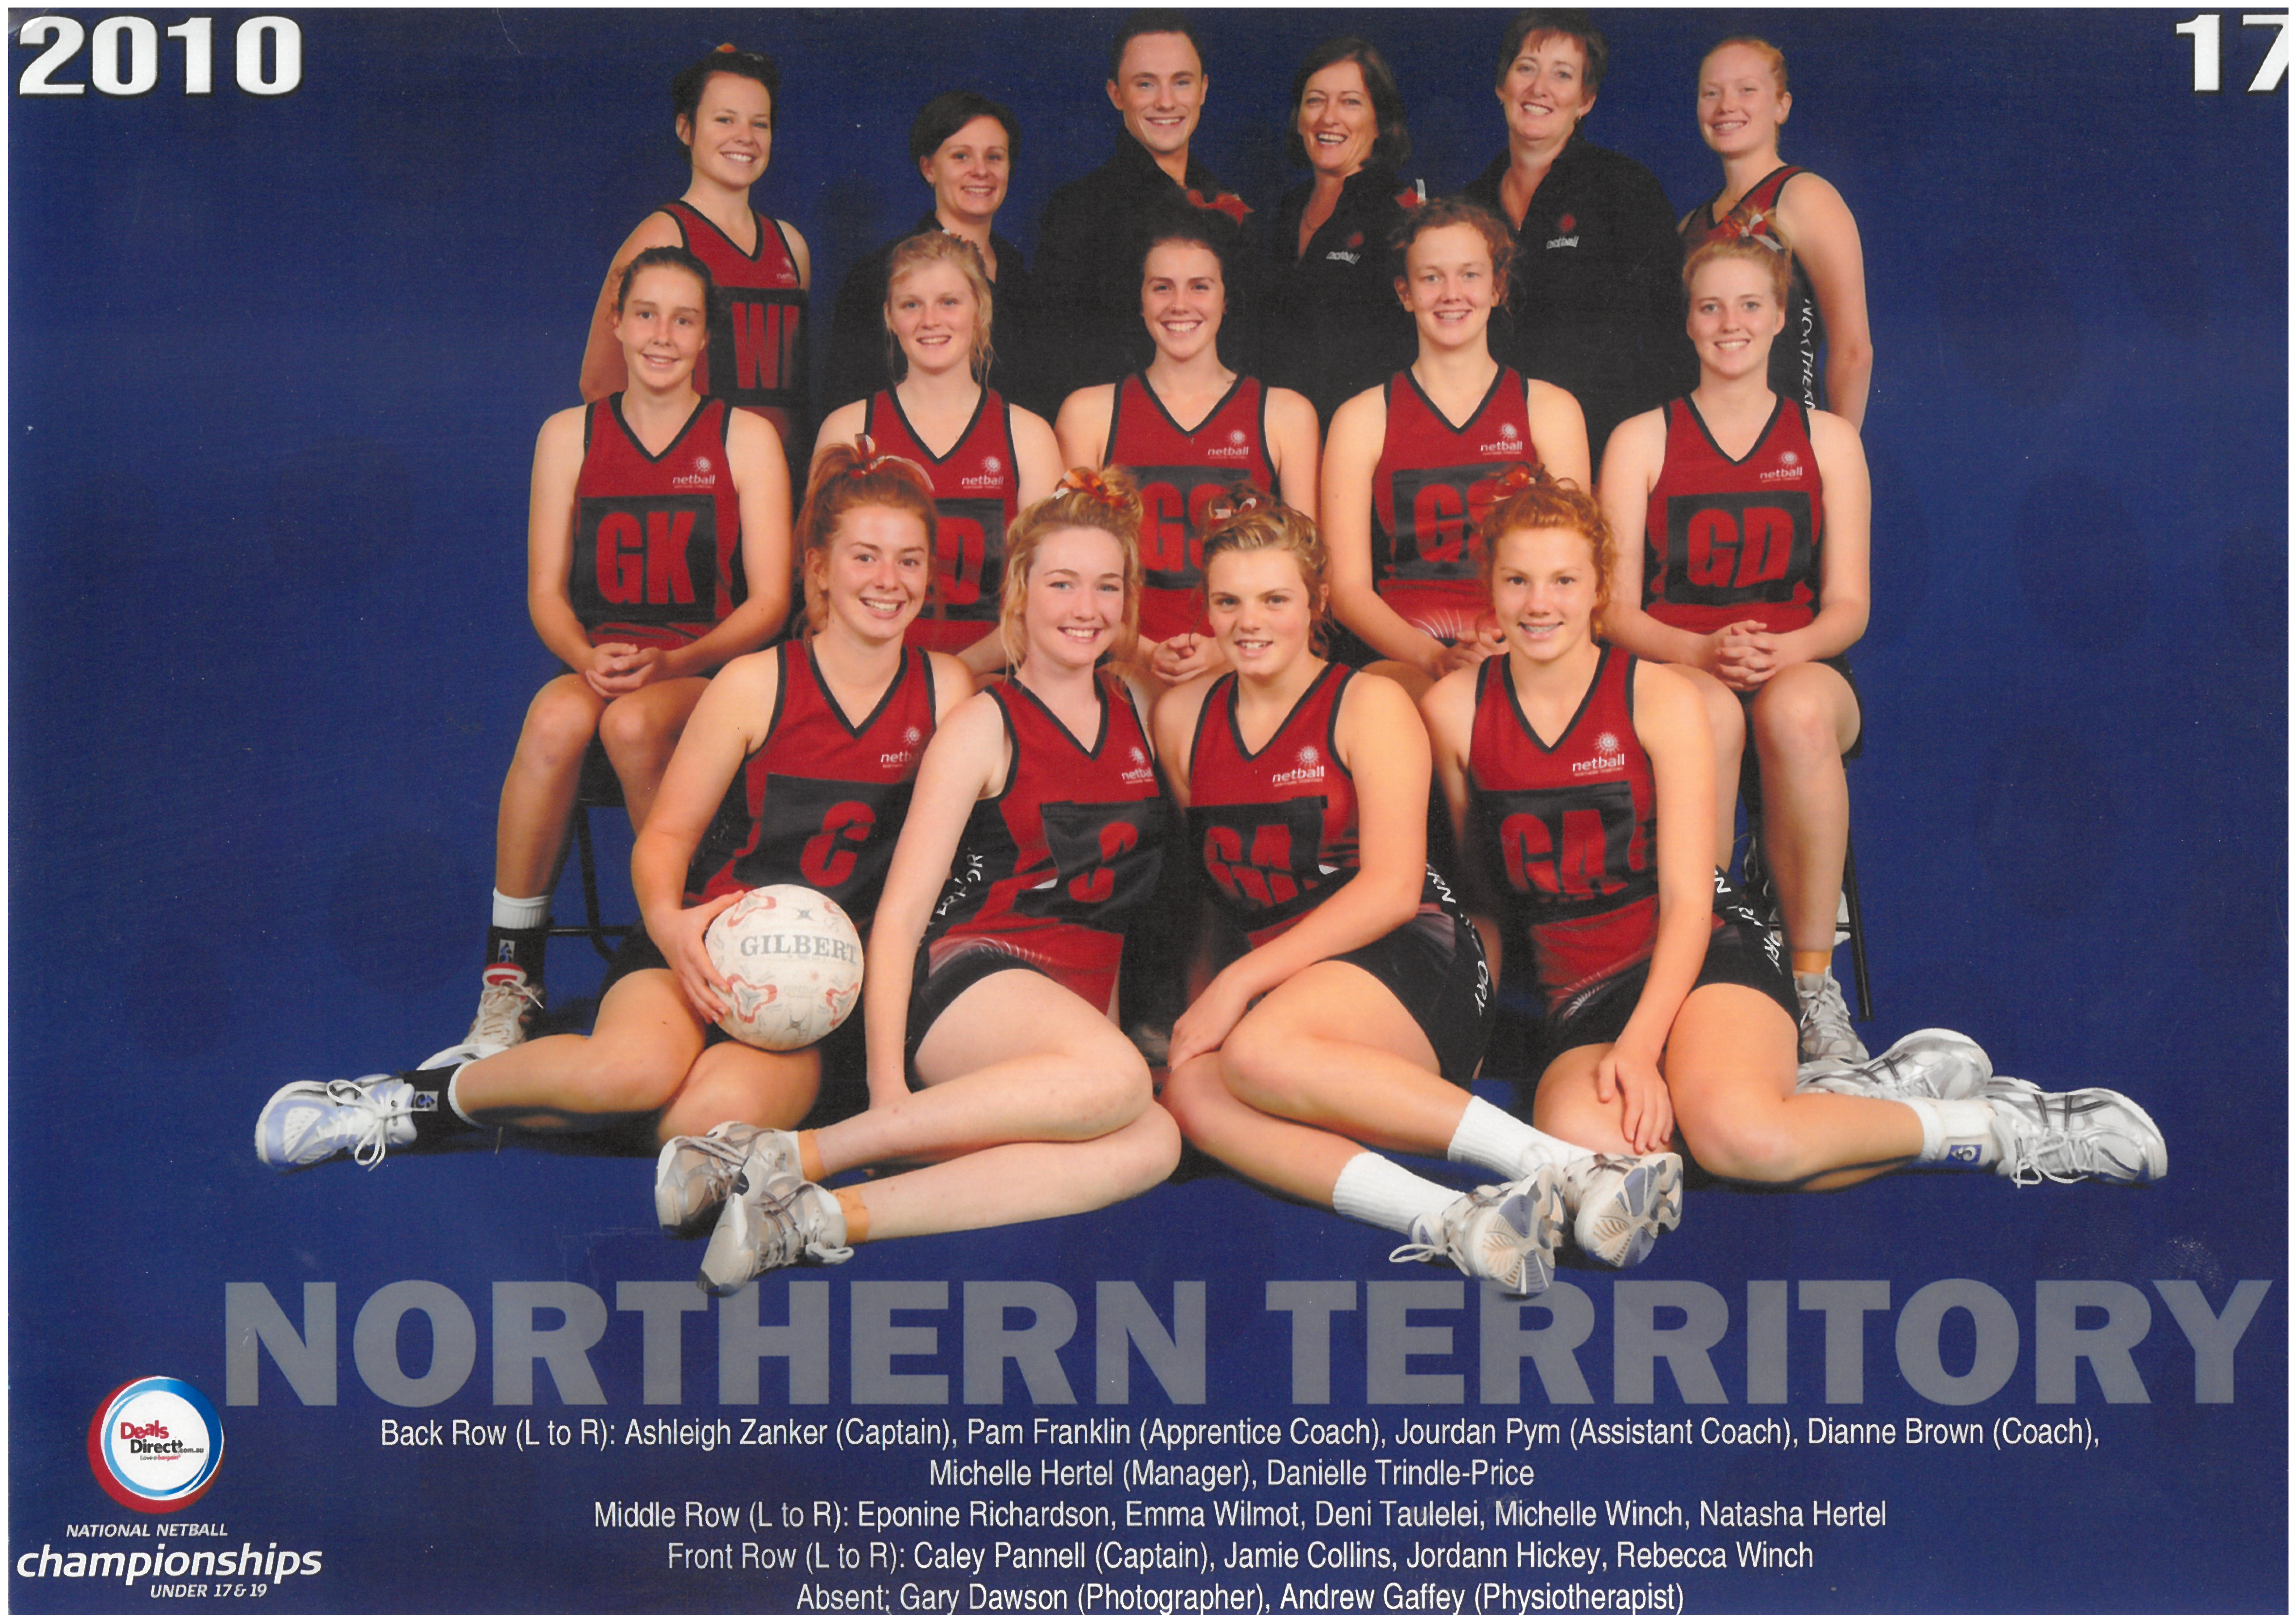 Netball NT State Team 2010 - 17U Team Photo with Names